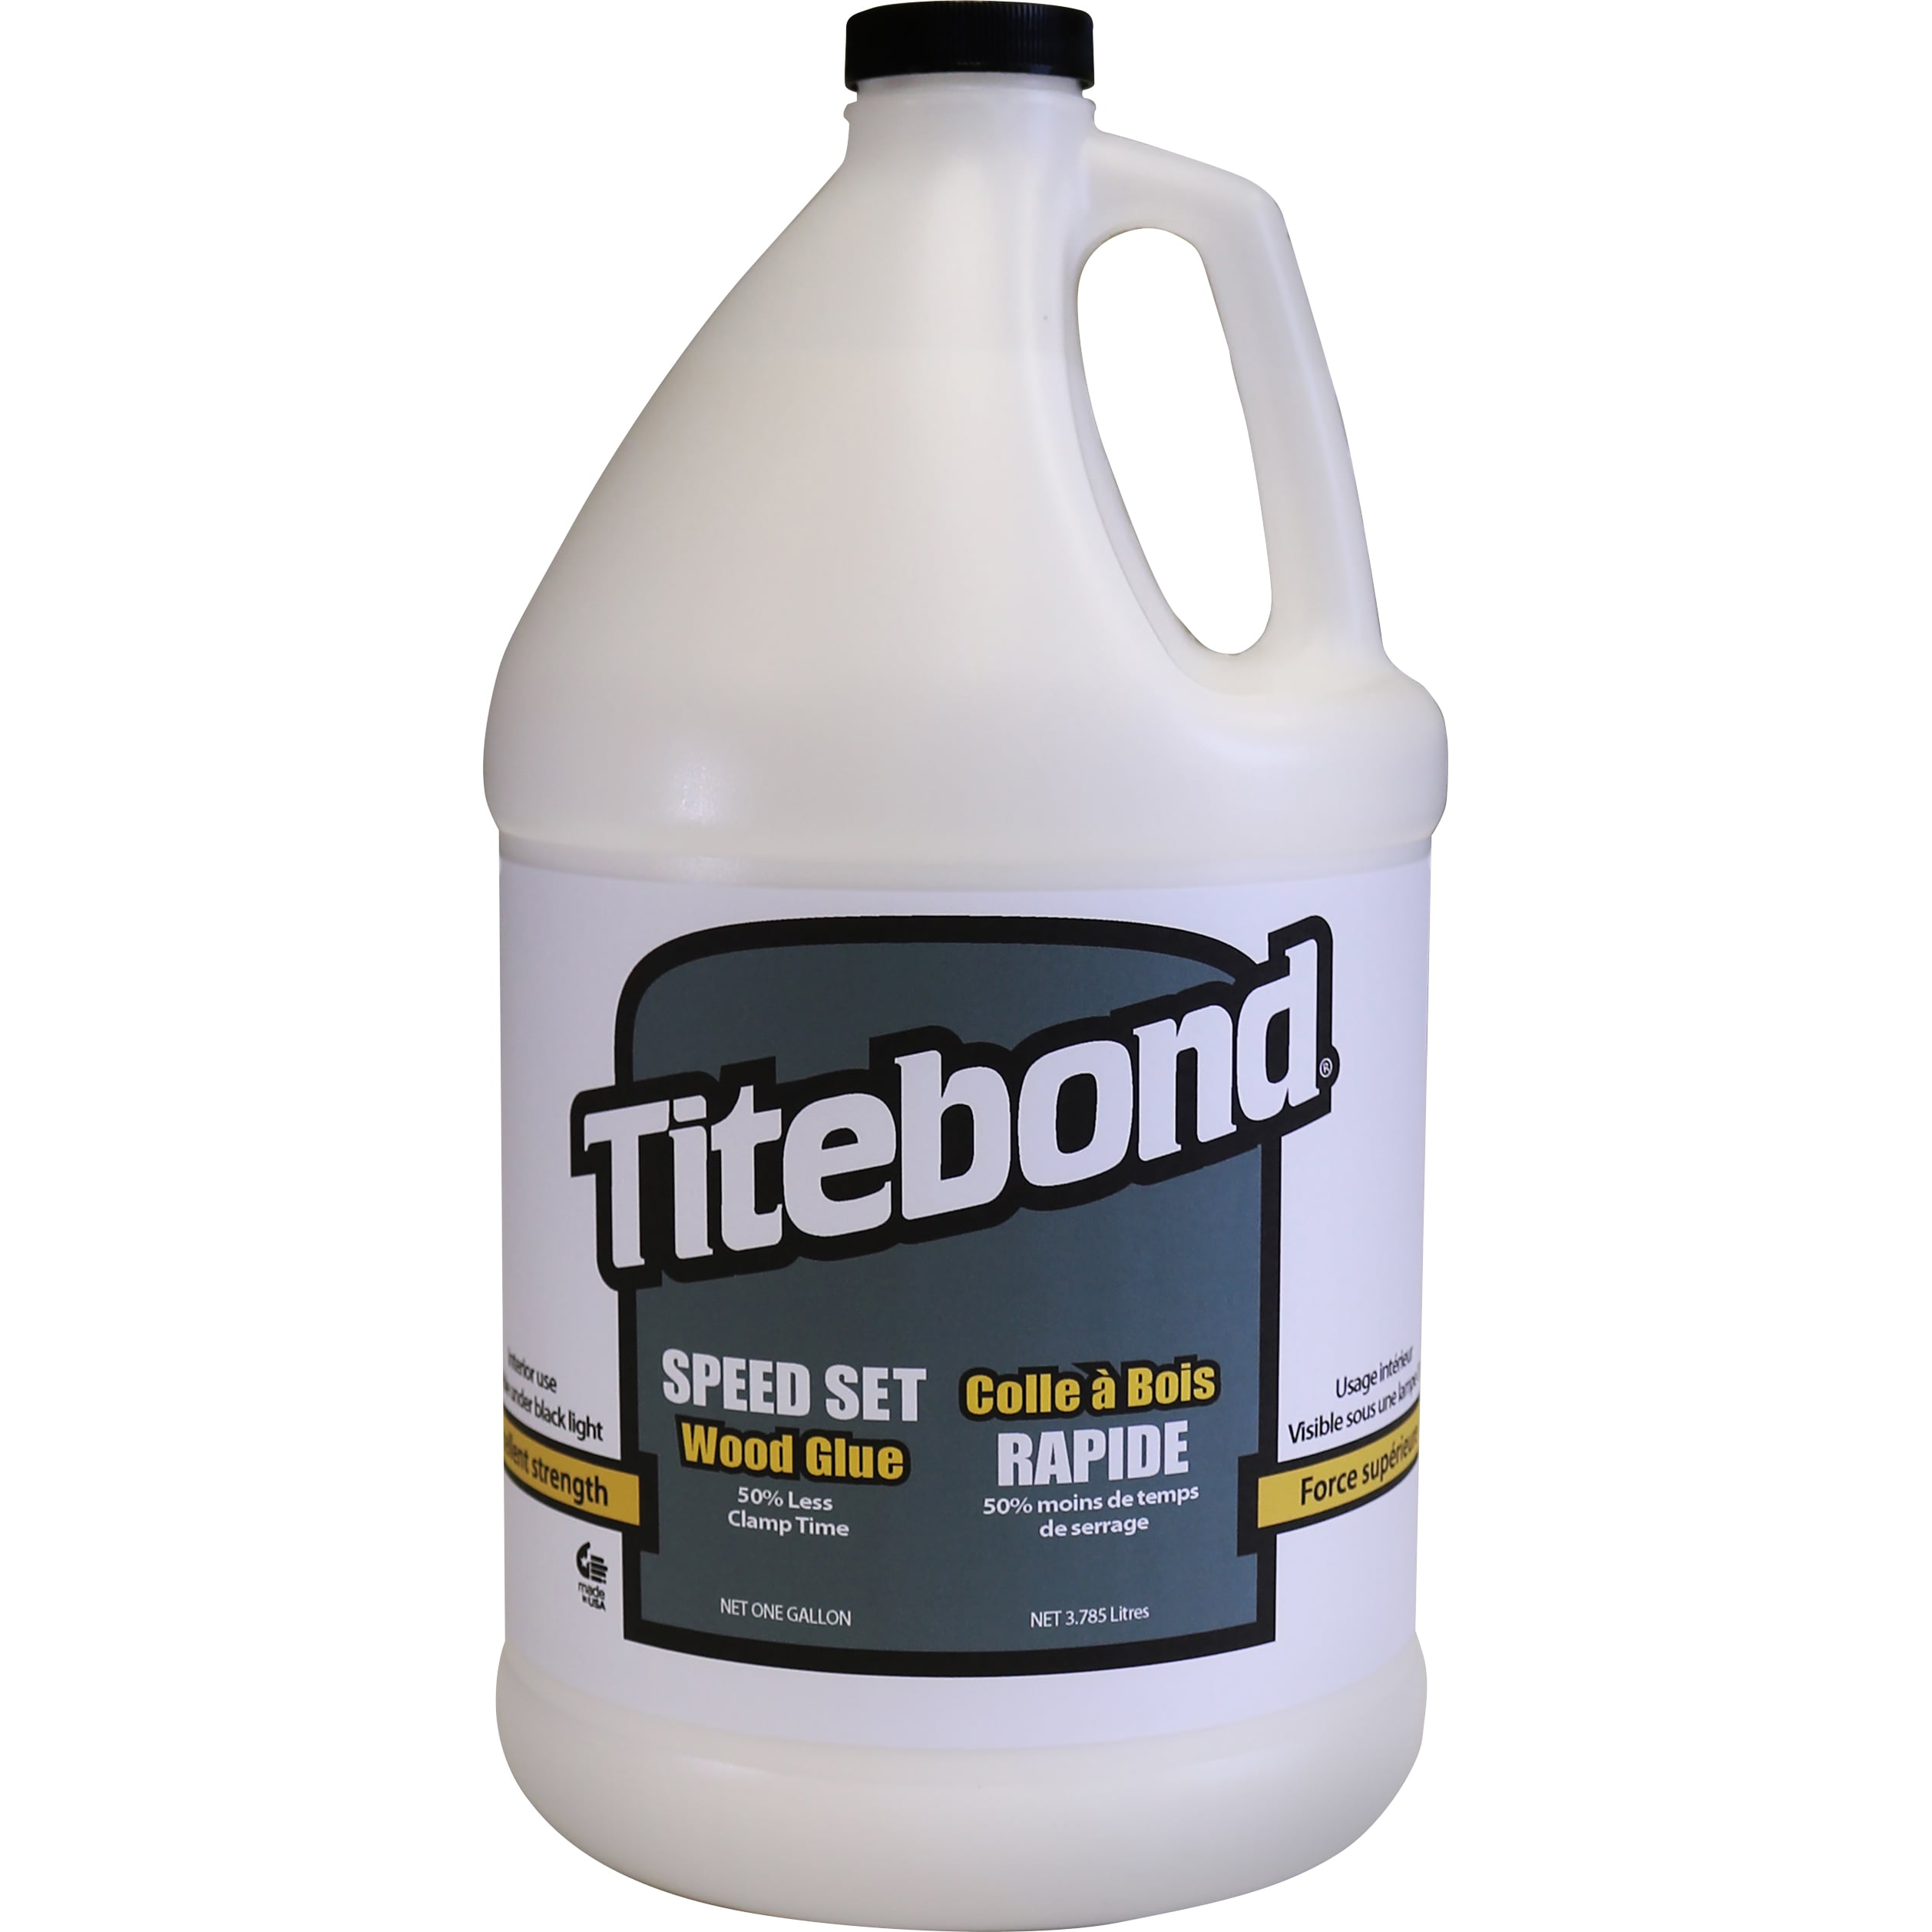 TITEBOND® Original Wood Glue, Yellow, 2.15 Gallon PROJug - Rapid Start